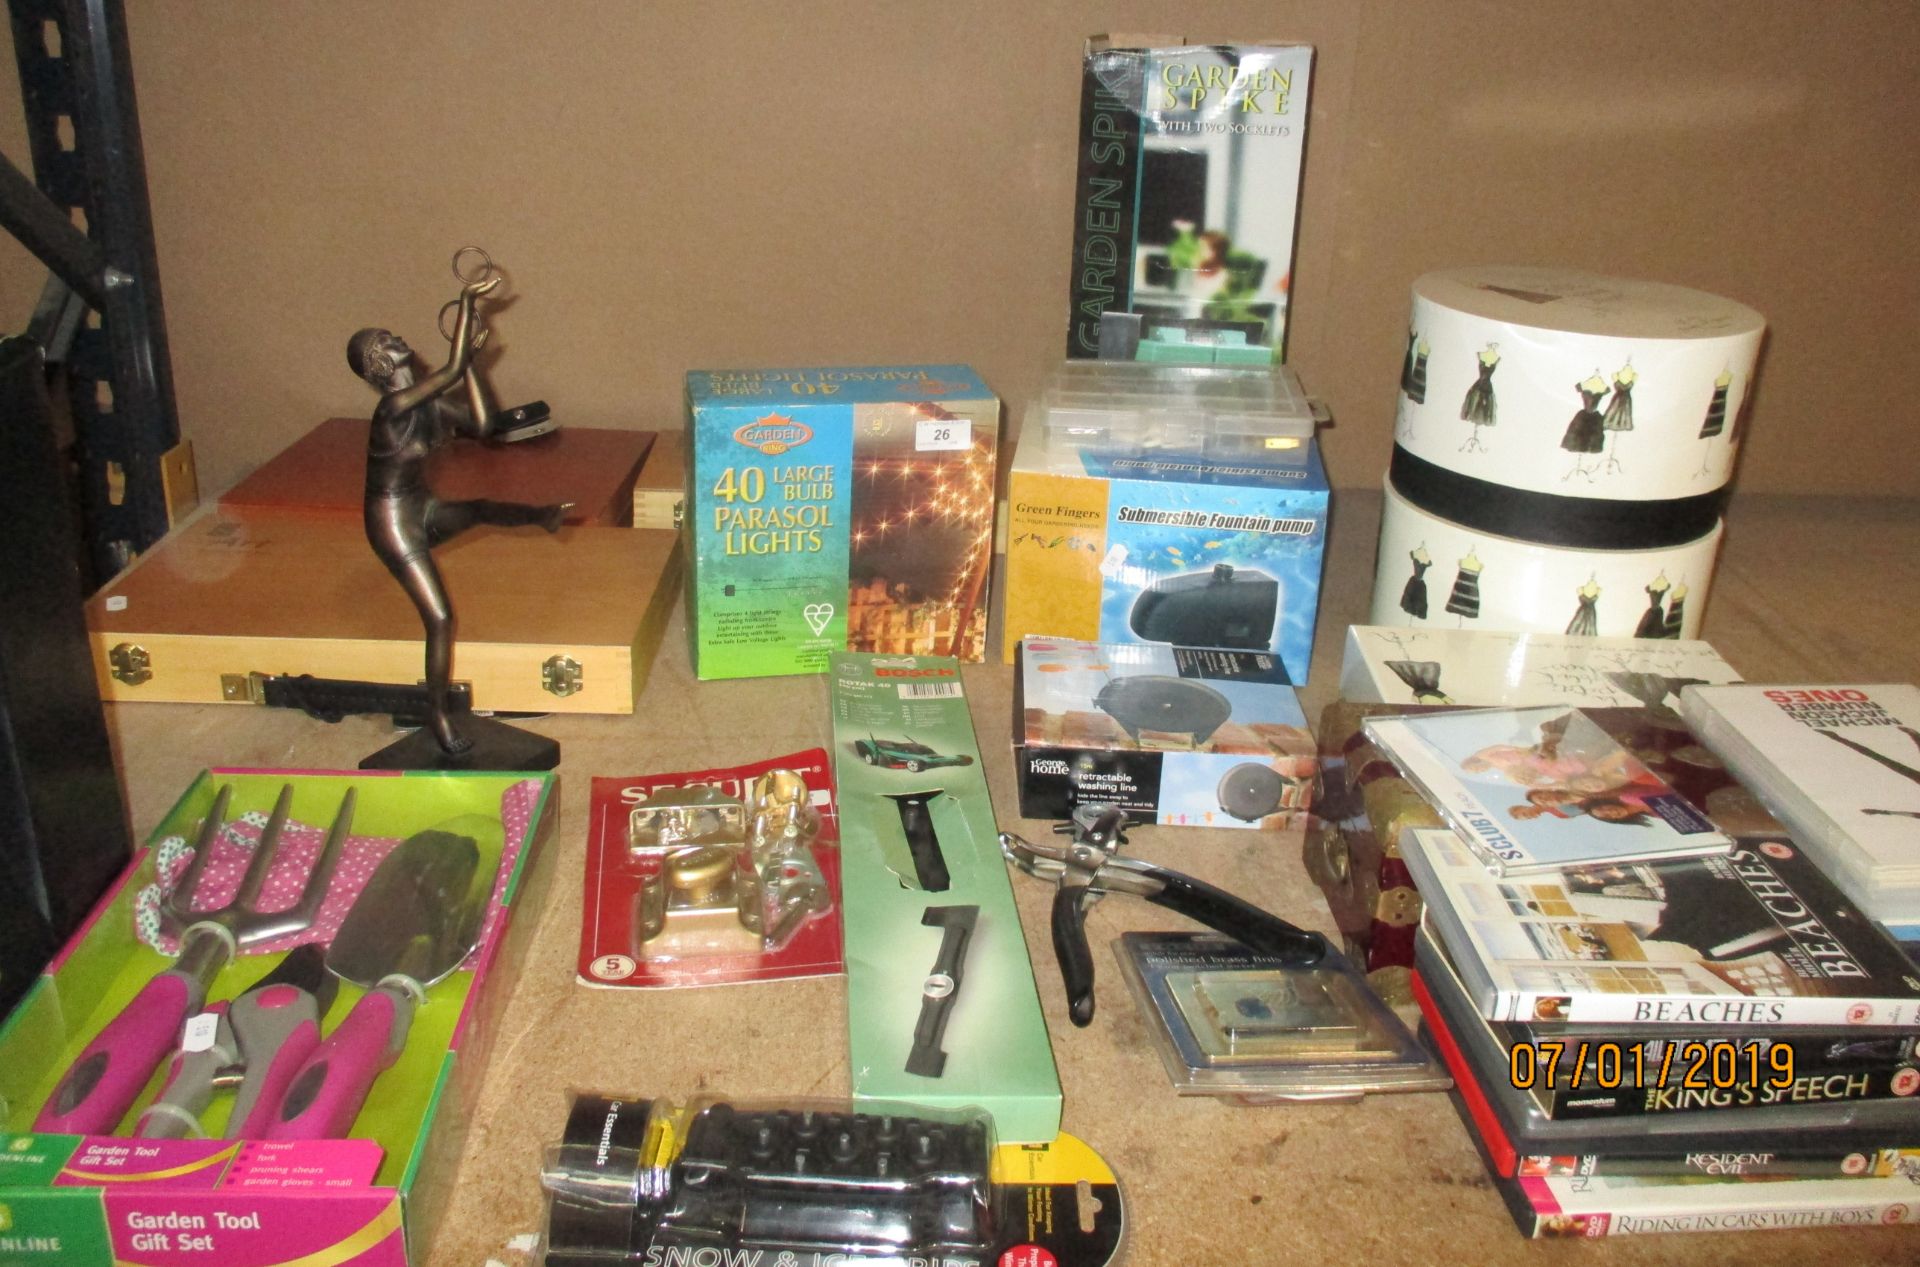 Bosch Rotak 40 lawnmower blades, Gardenline tool kit, submersible fountain pump, DVD's, mugs,